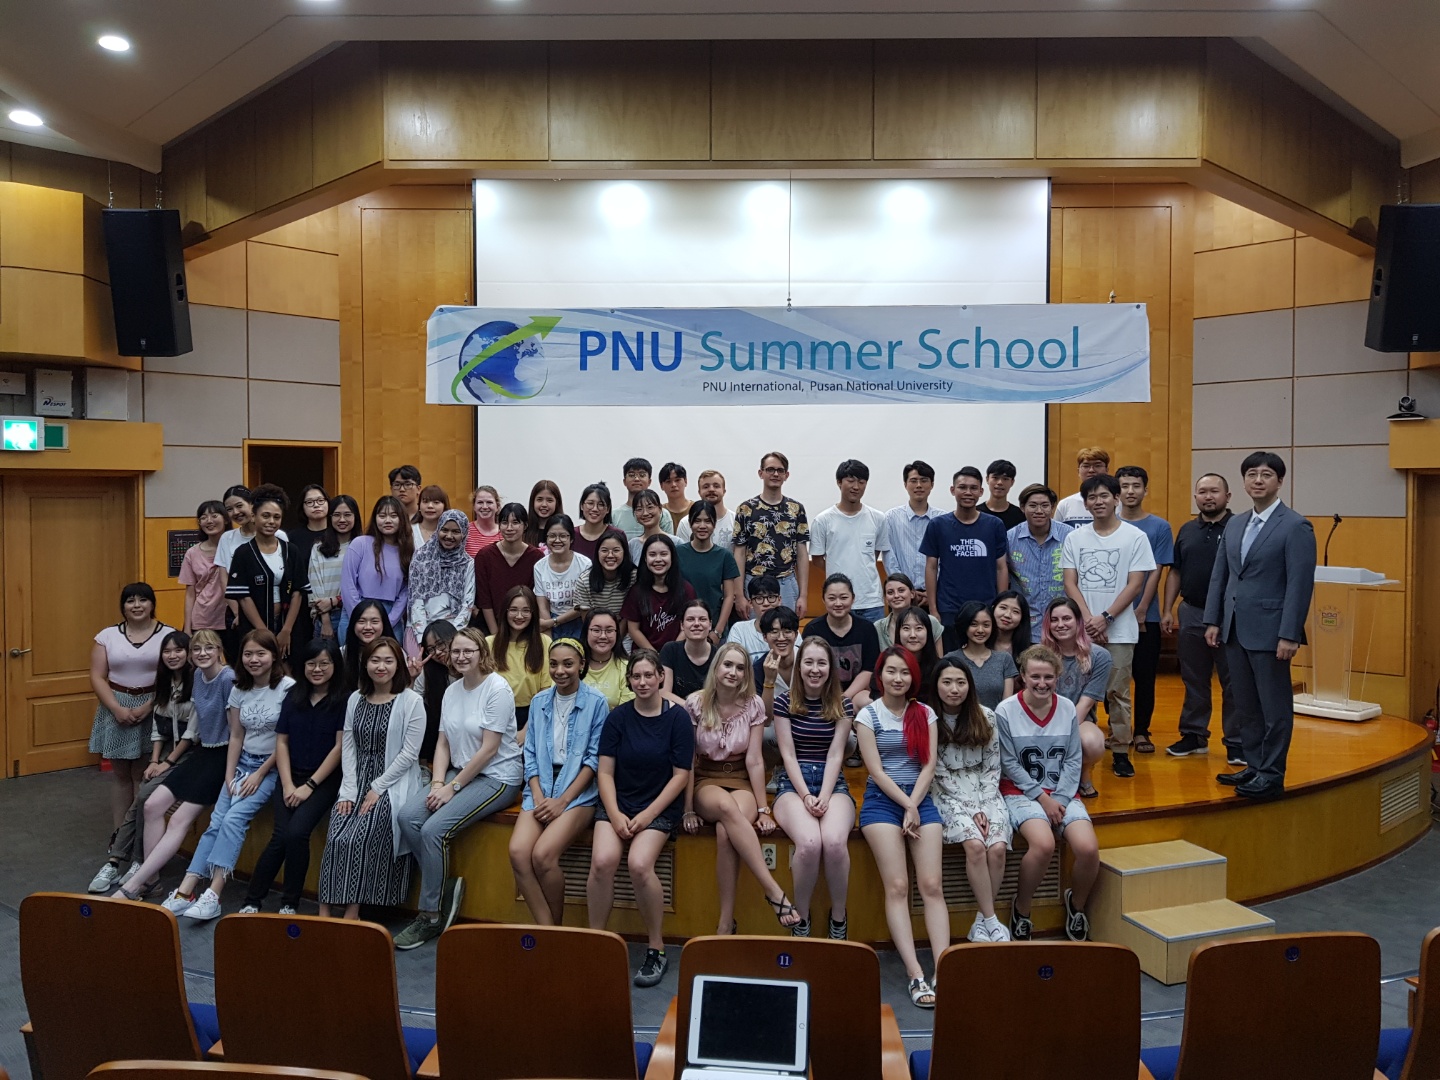 2019 PNU Summer School thumb.jpg